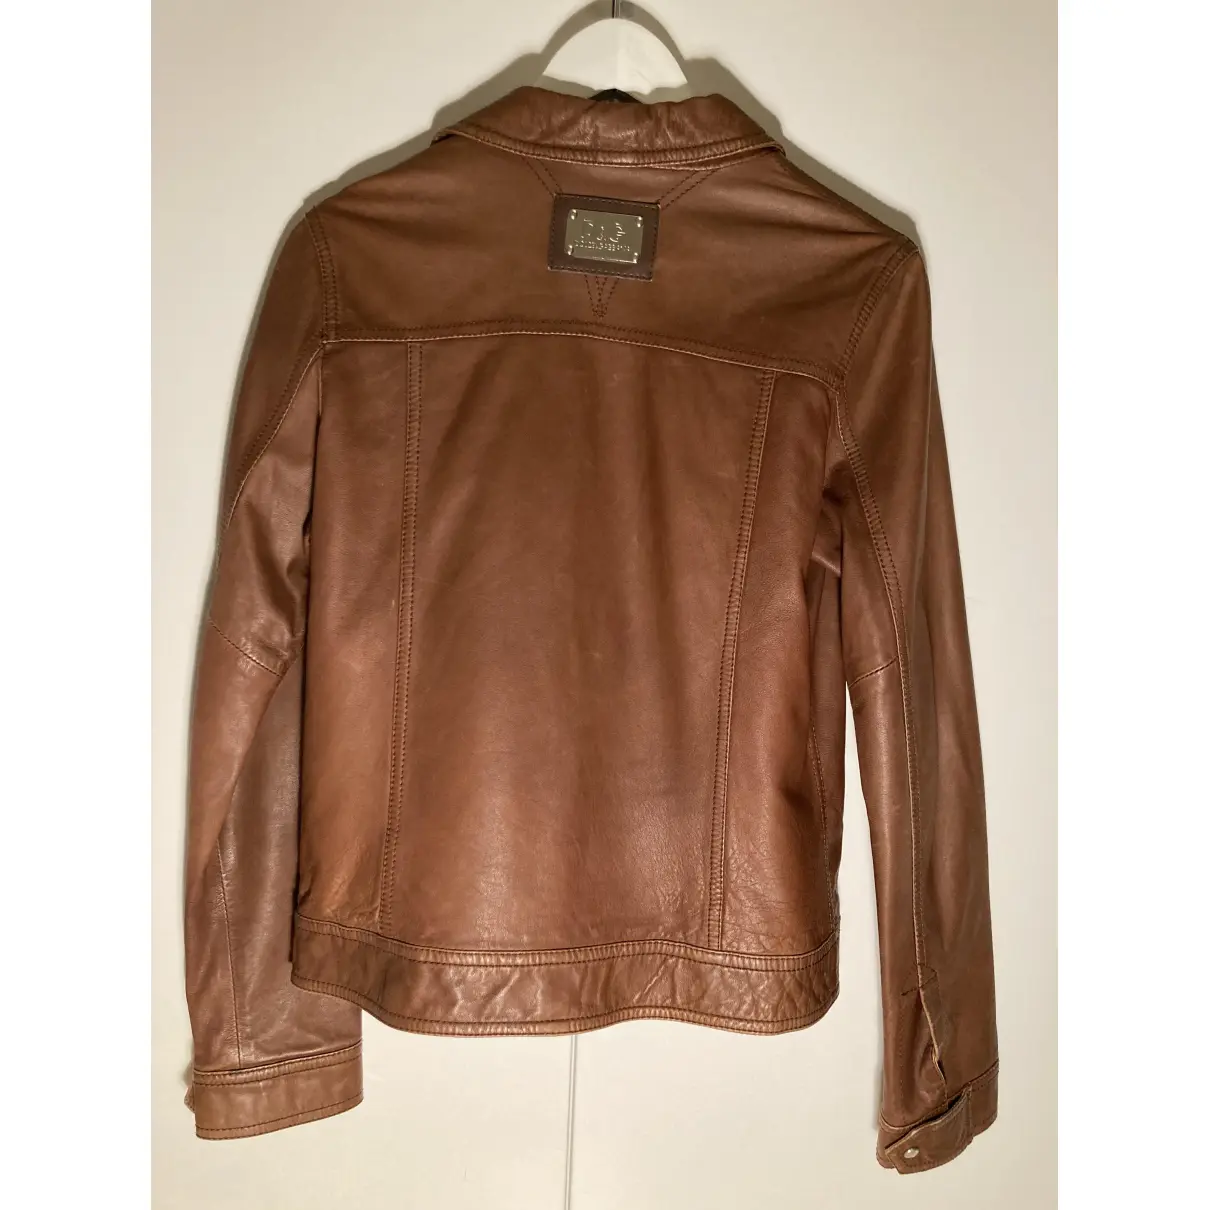 Buy D&G Leather vest online